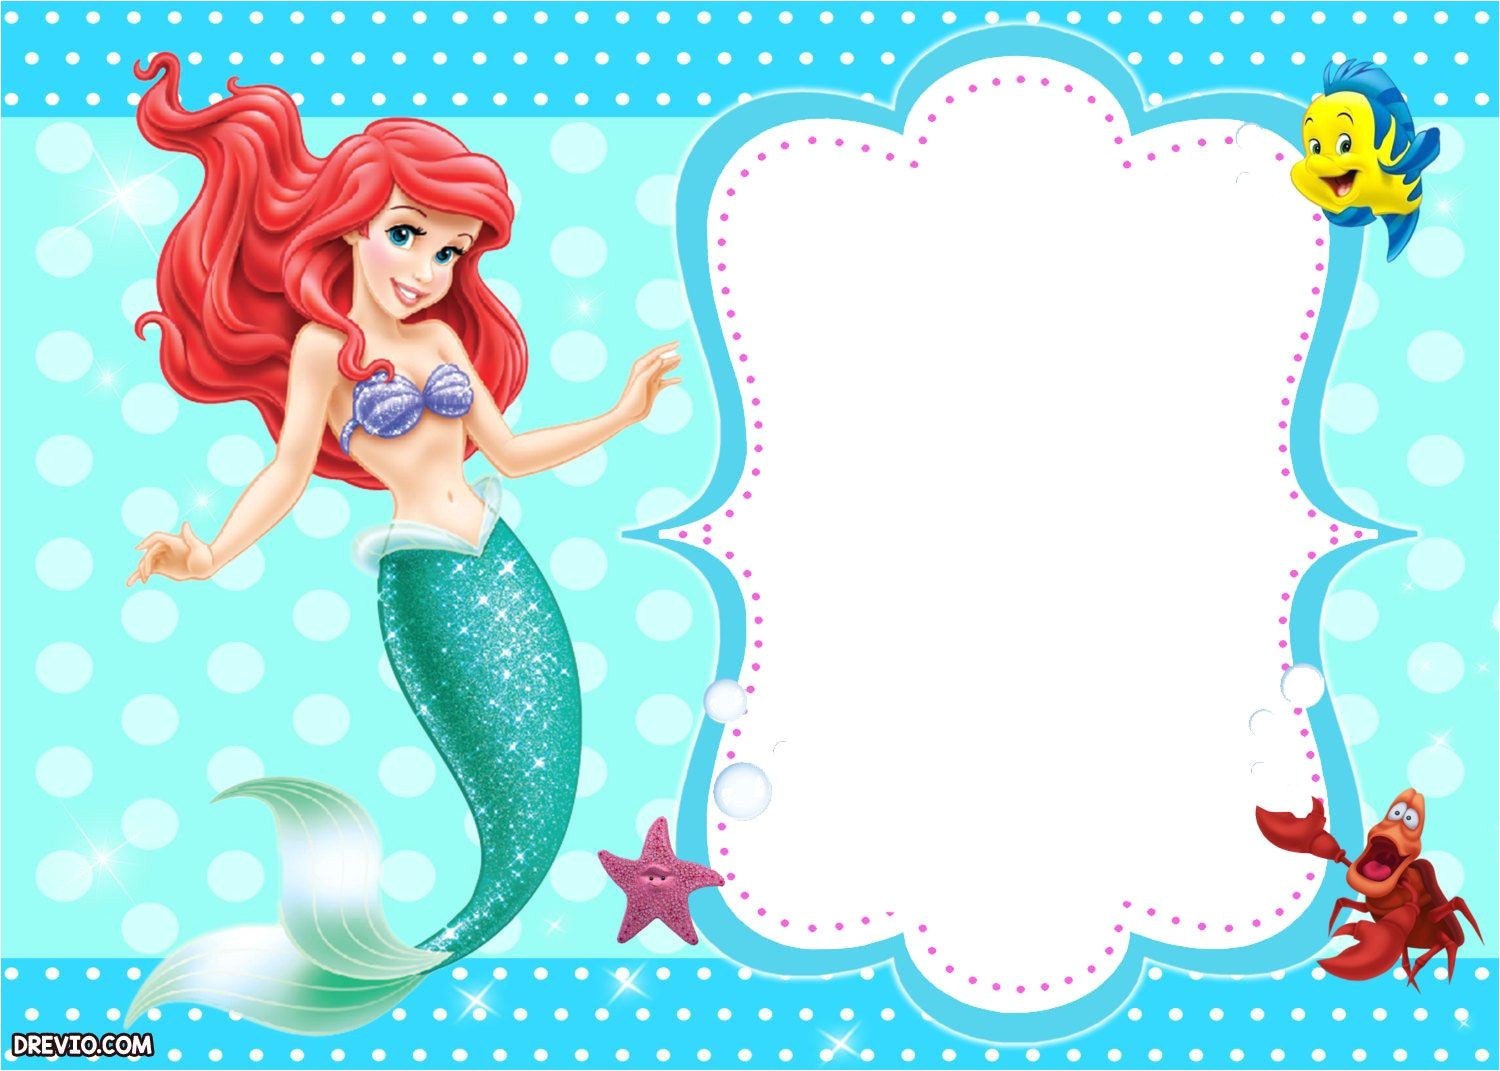 Little Mermaid Birthday Invitation Template Download Updated Free Printable Ariel the Little Mermaid